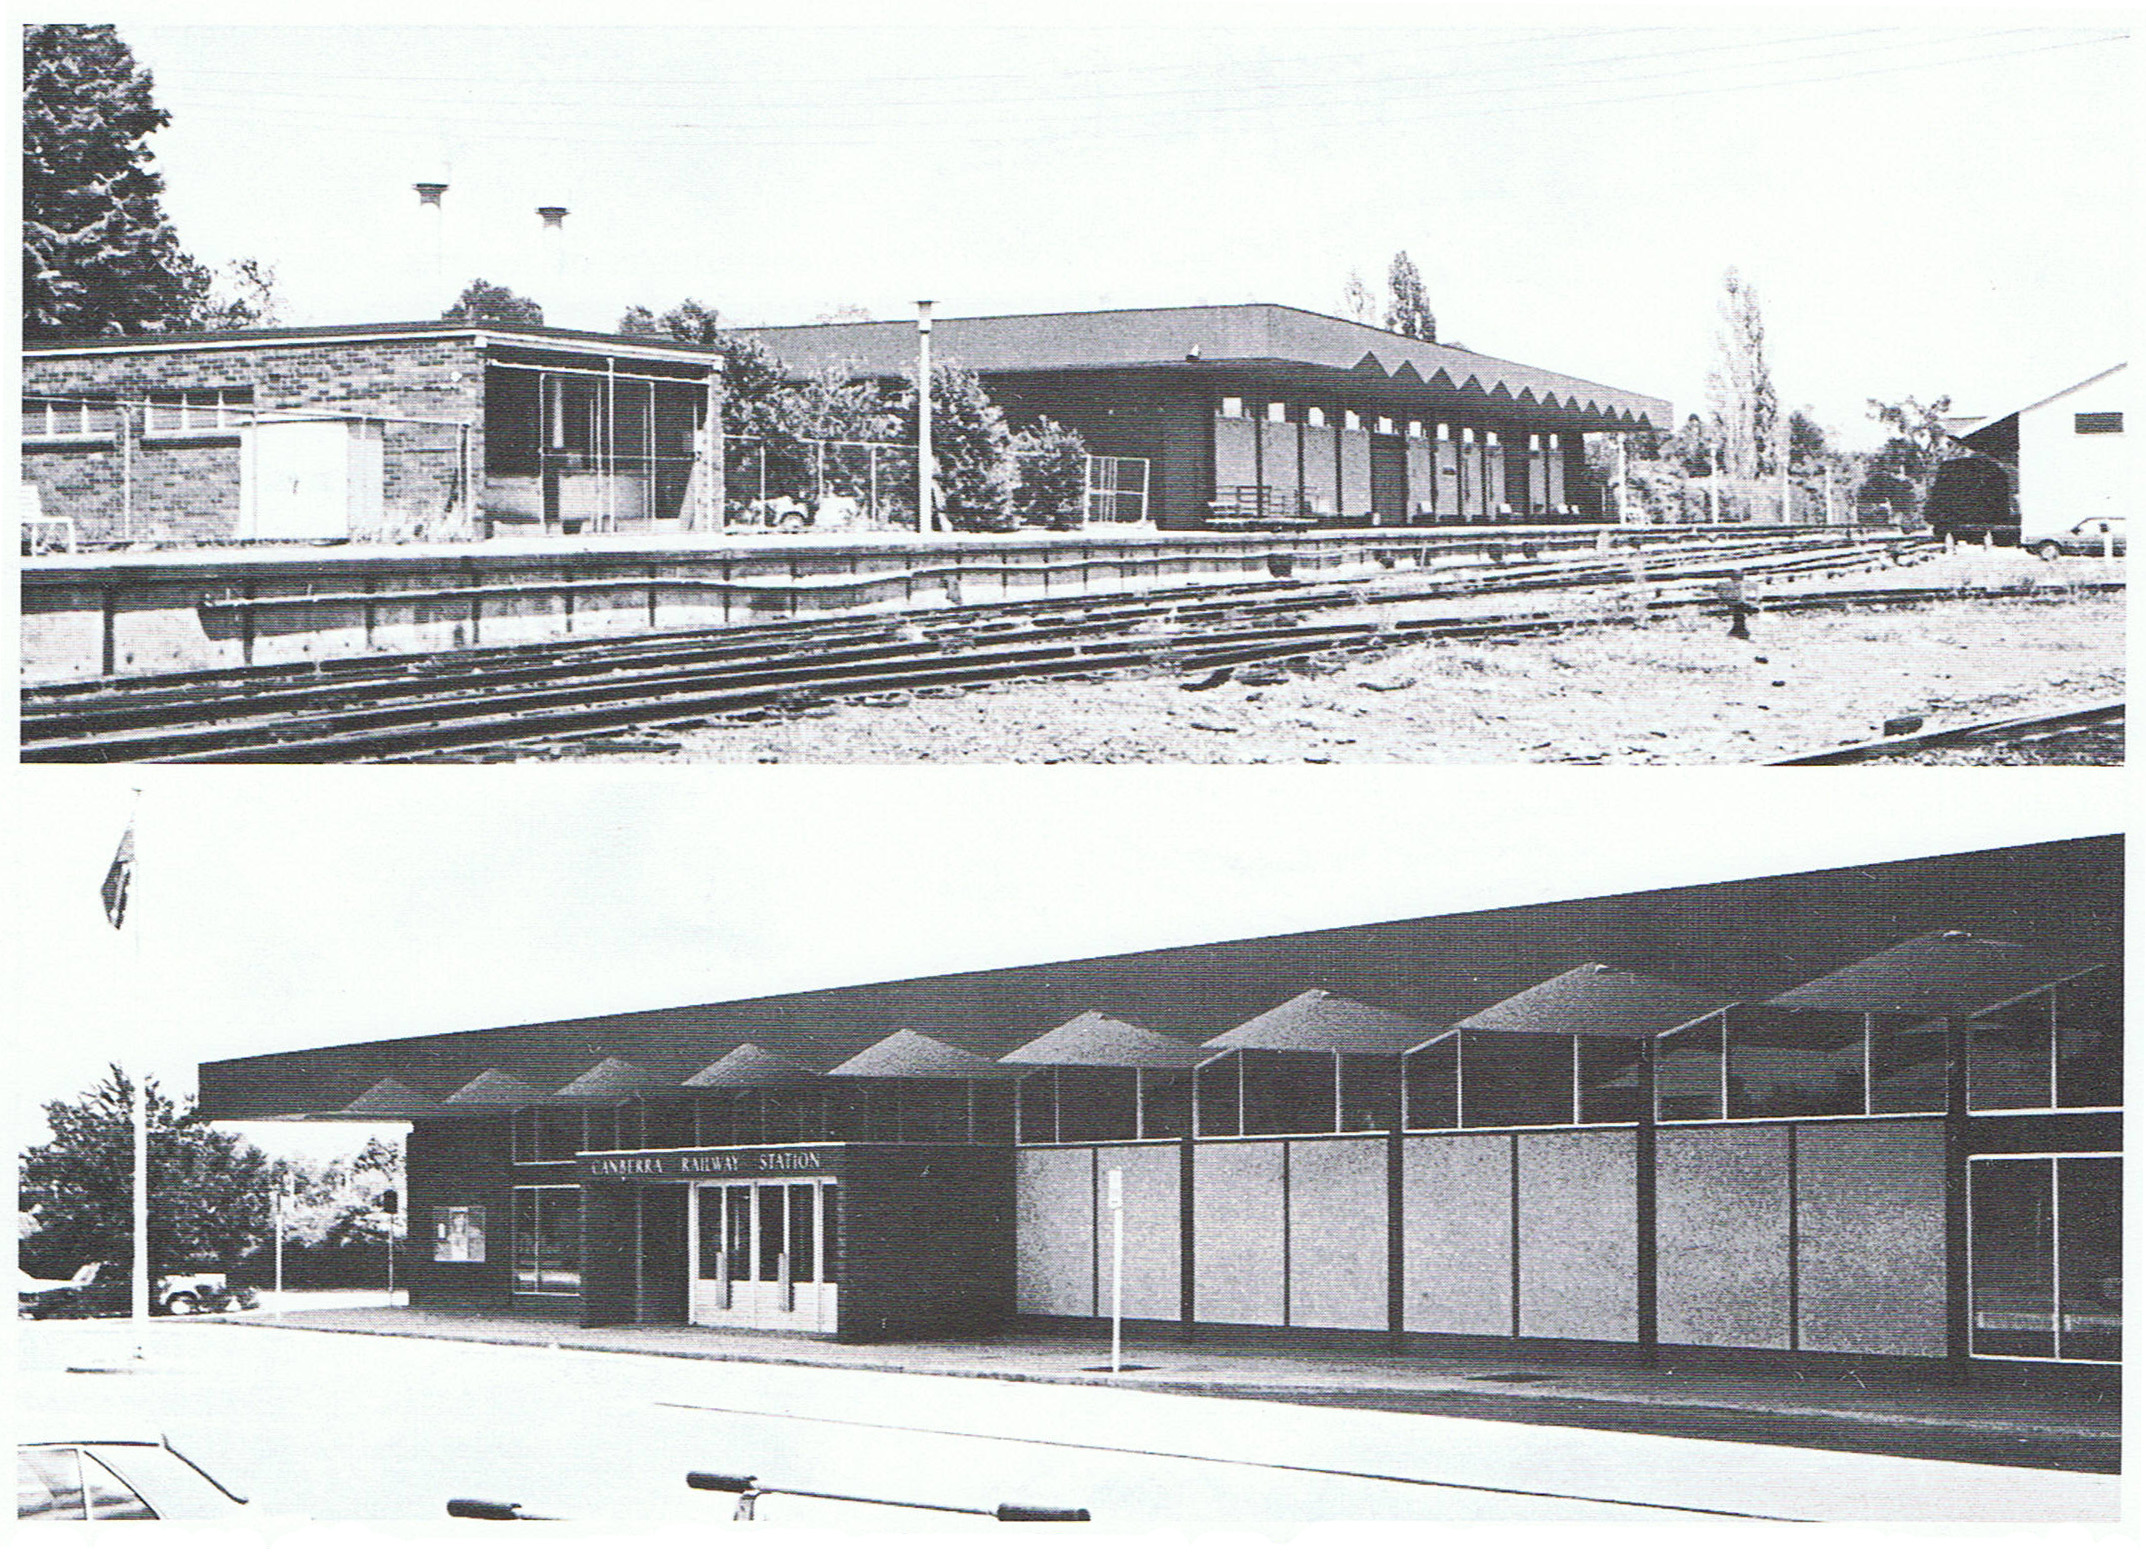 The 1966 passenger terminal building